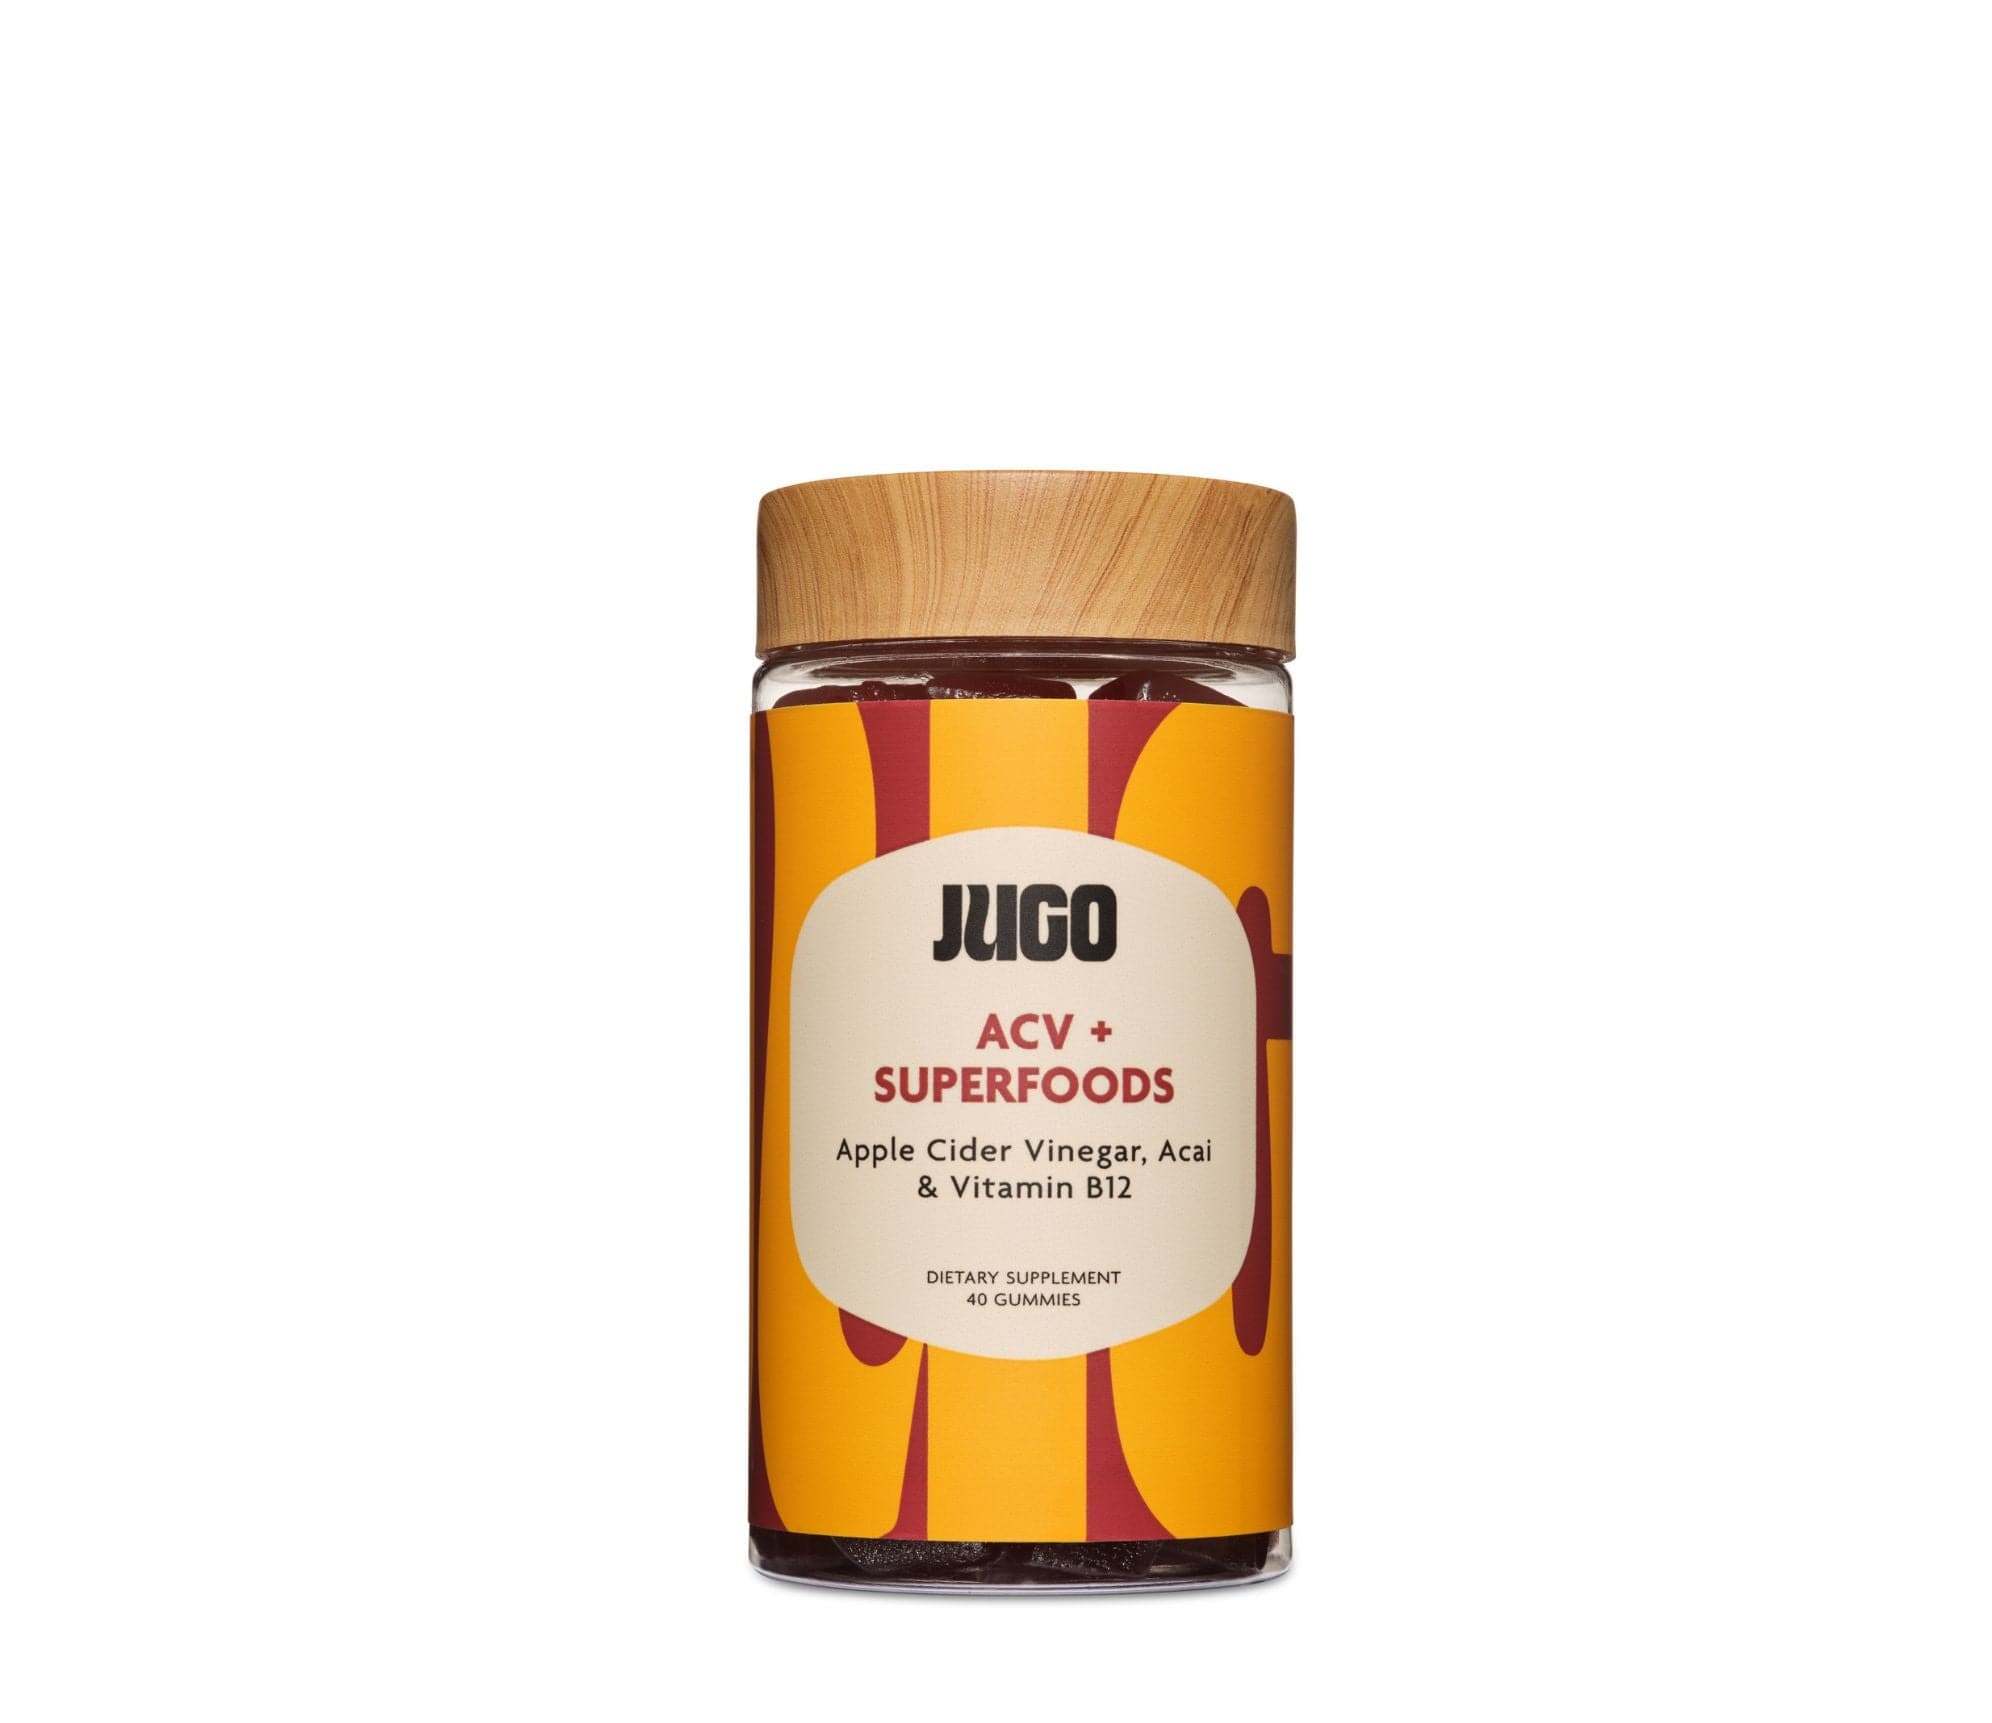 JUGO ACV + SUPERFOODS gummies